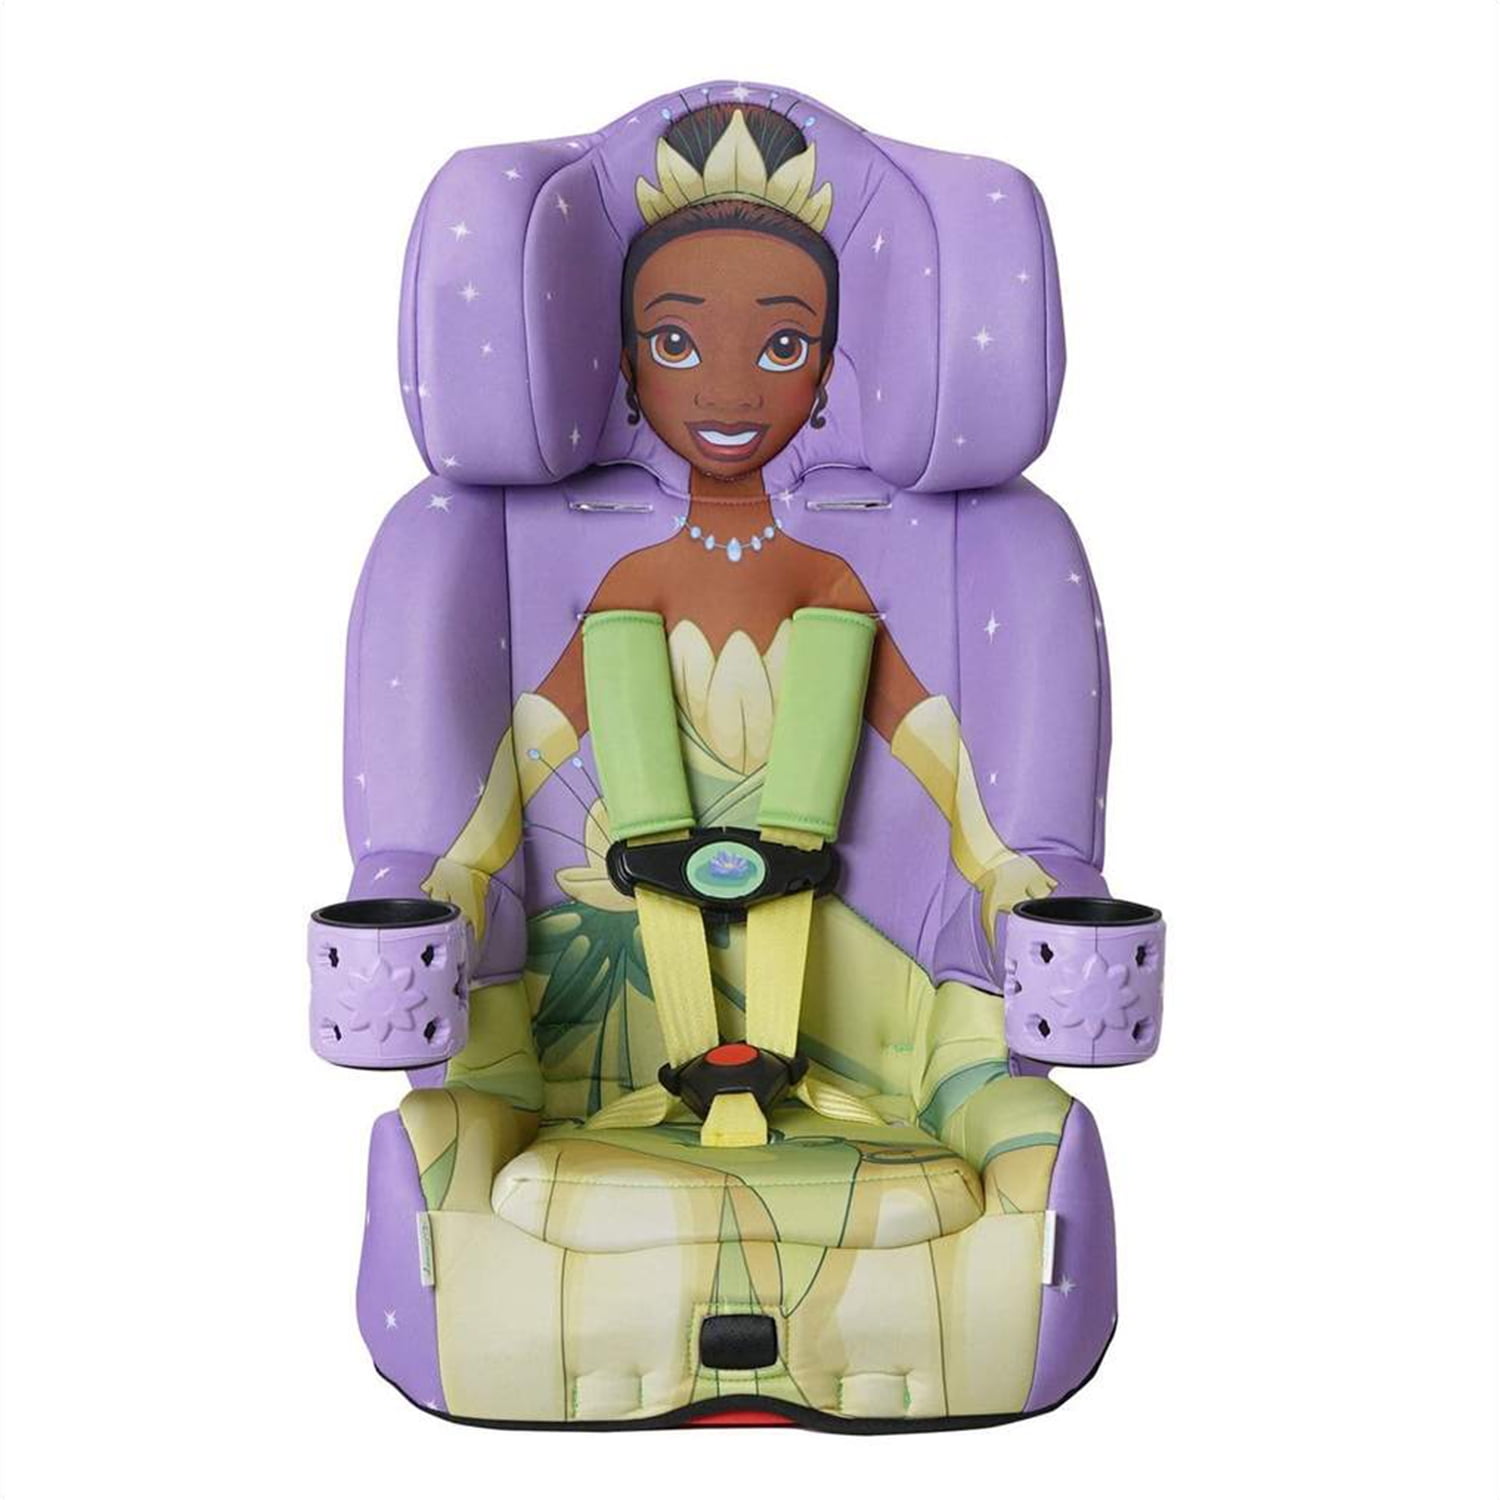 KidsEmbrace Combination Booster Car Seat, Disney Princess